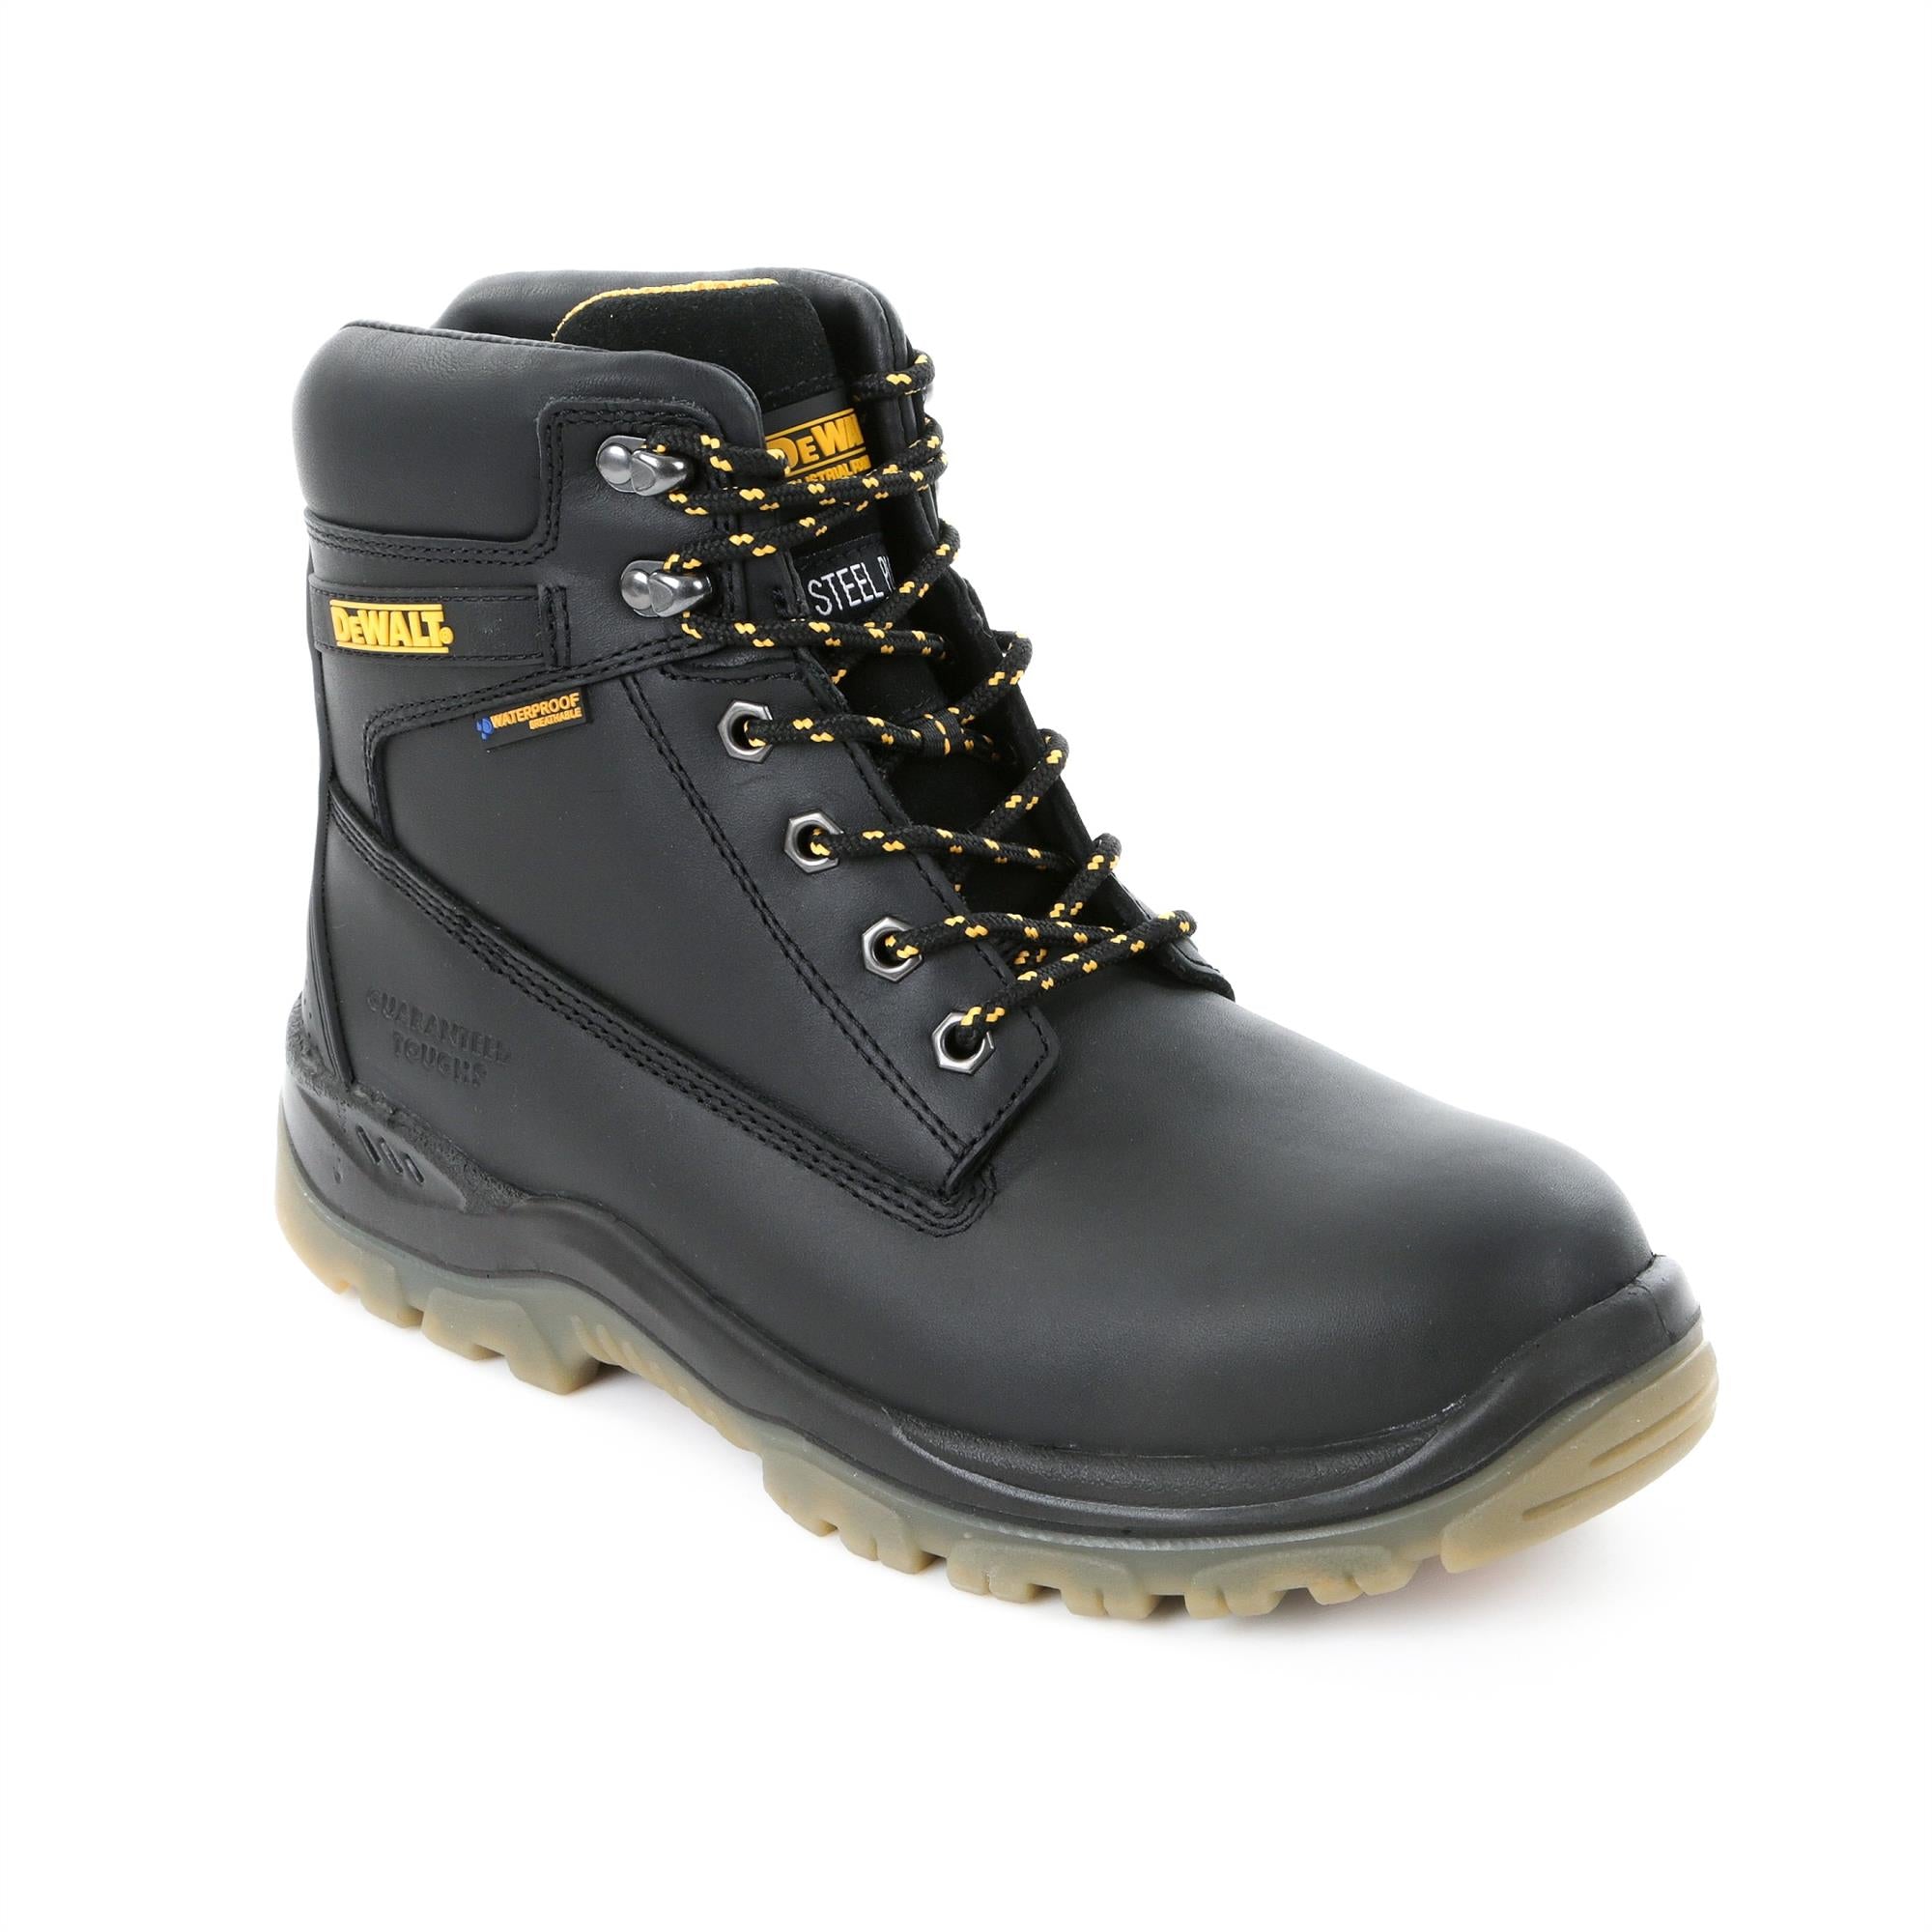 DeWalt Titanium S3 black leather waterproof steel toe/midsole work safety boots